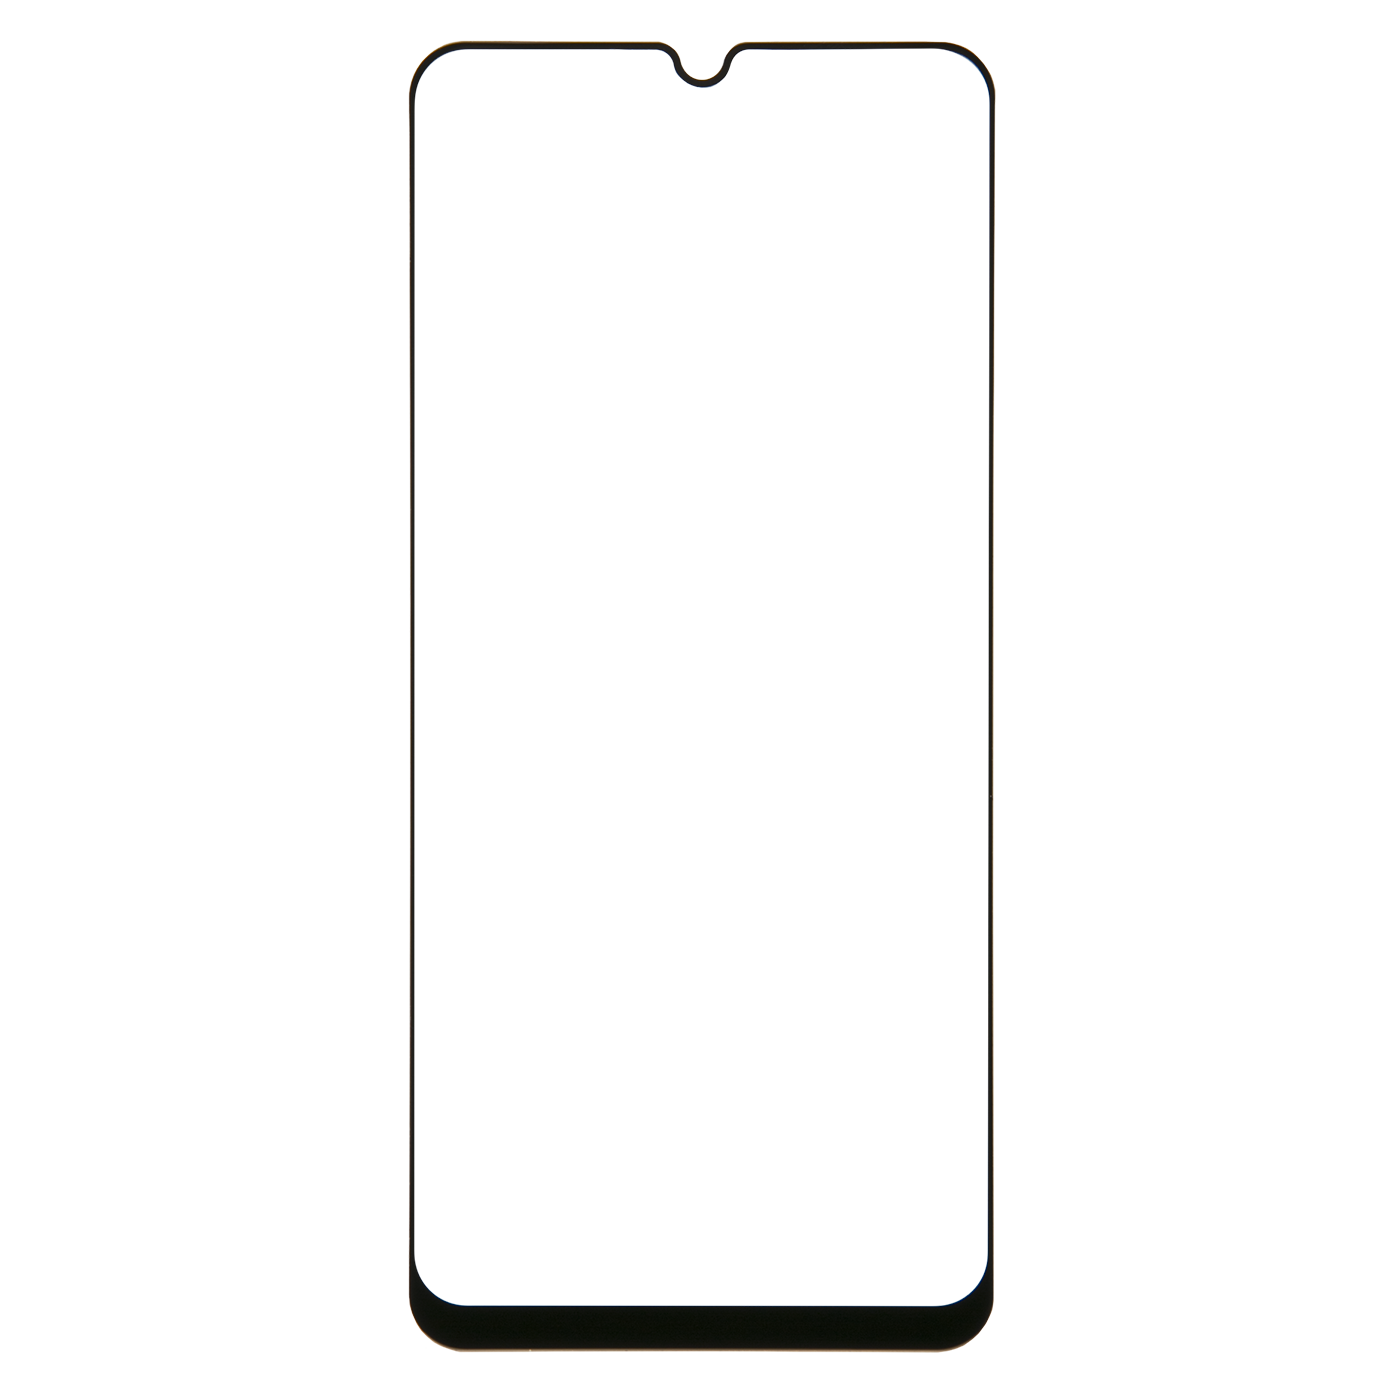 Защитный экран Samsung Galaxy A50 Full screen tempered glass